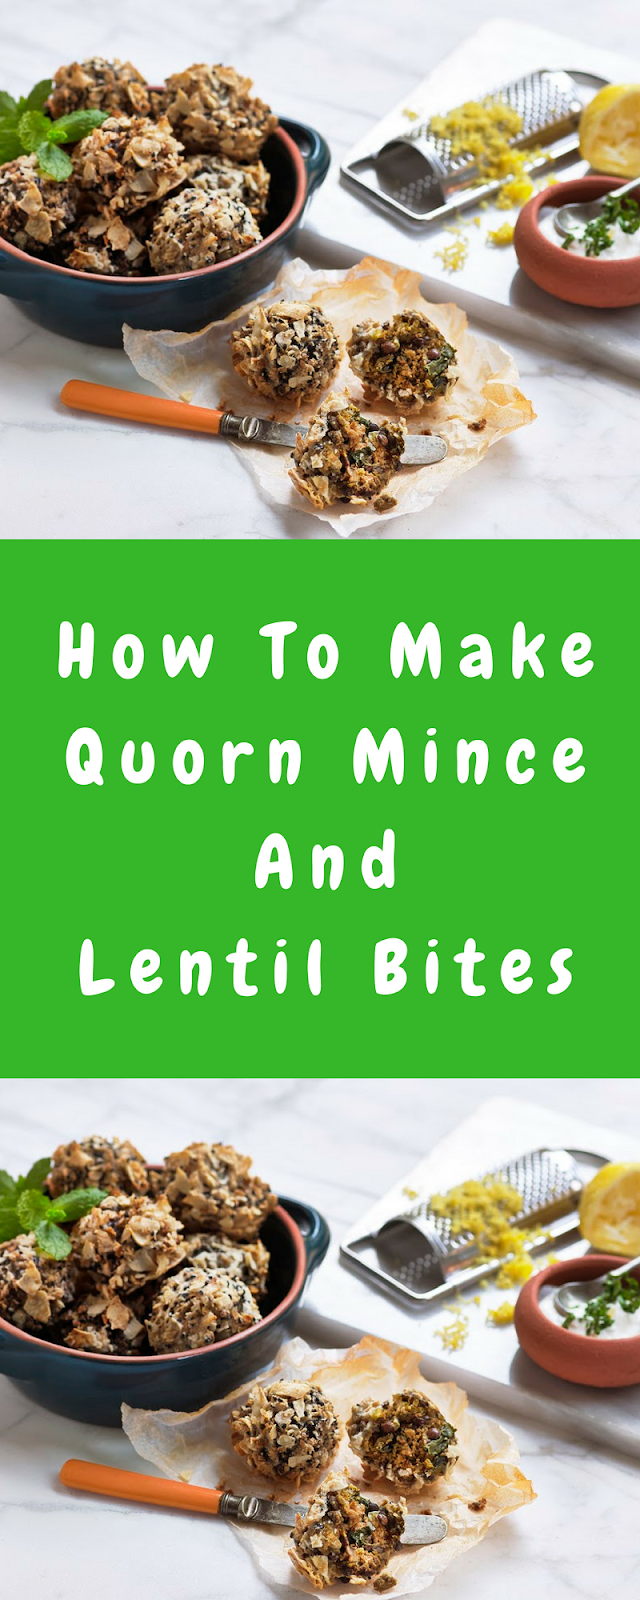 Quorn Mince And Lentil Bites